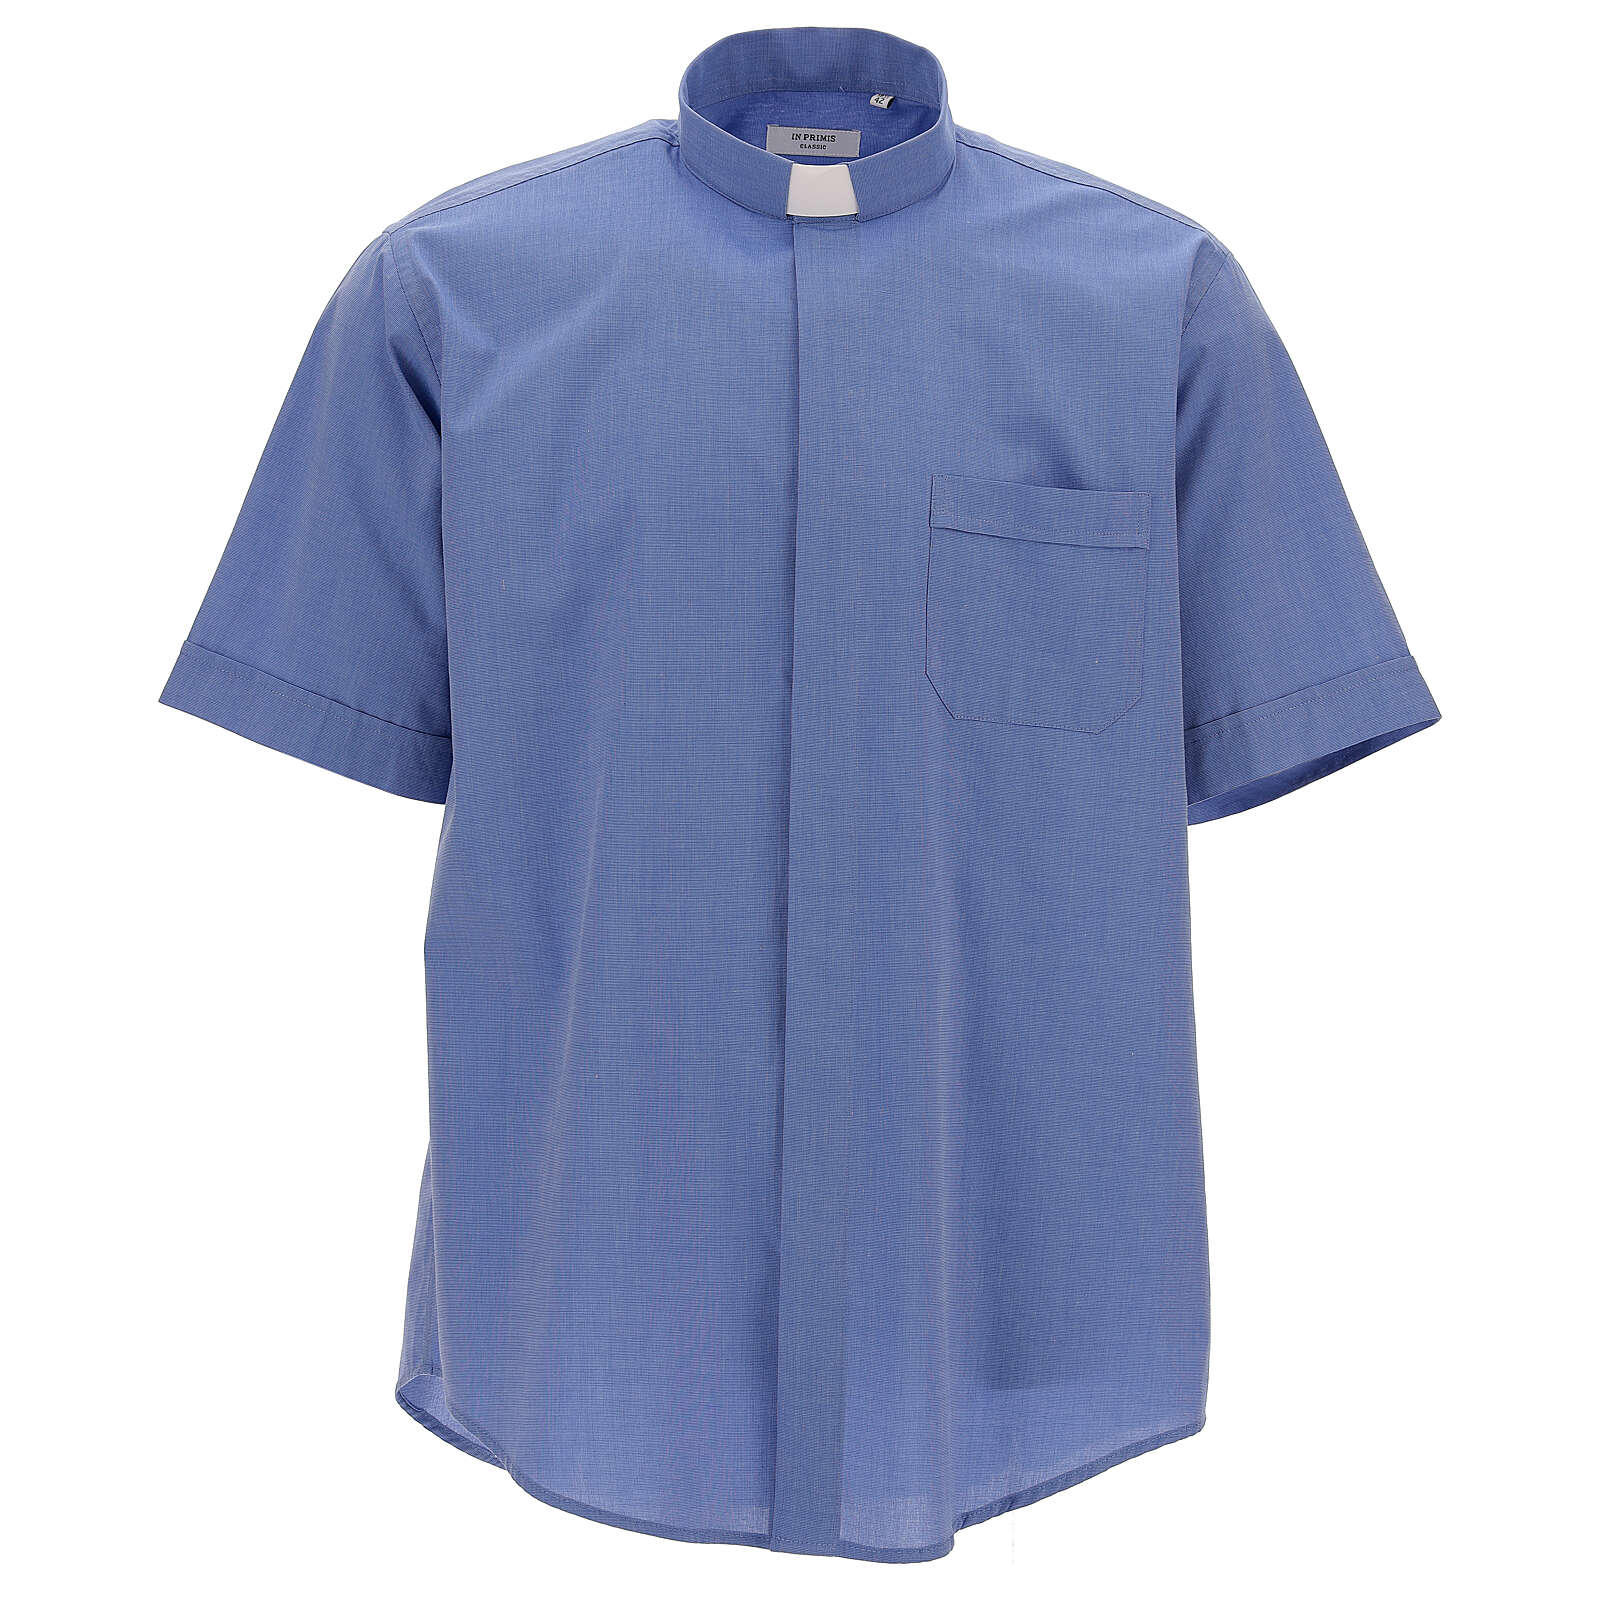 Clergical shirt, blue fil à fil cotton, short sleeves | online sales on ...